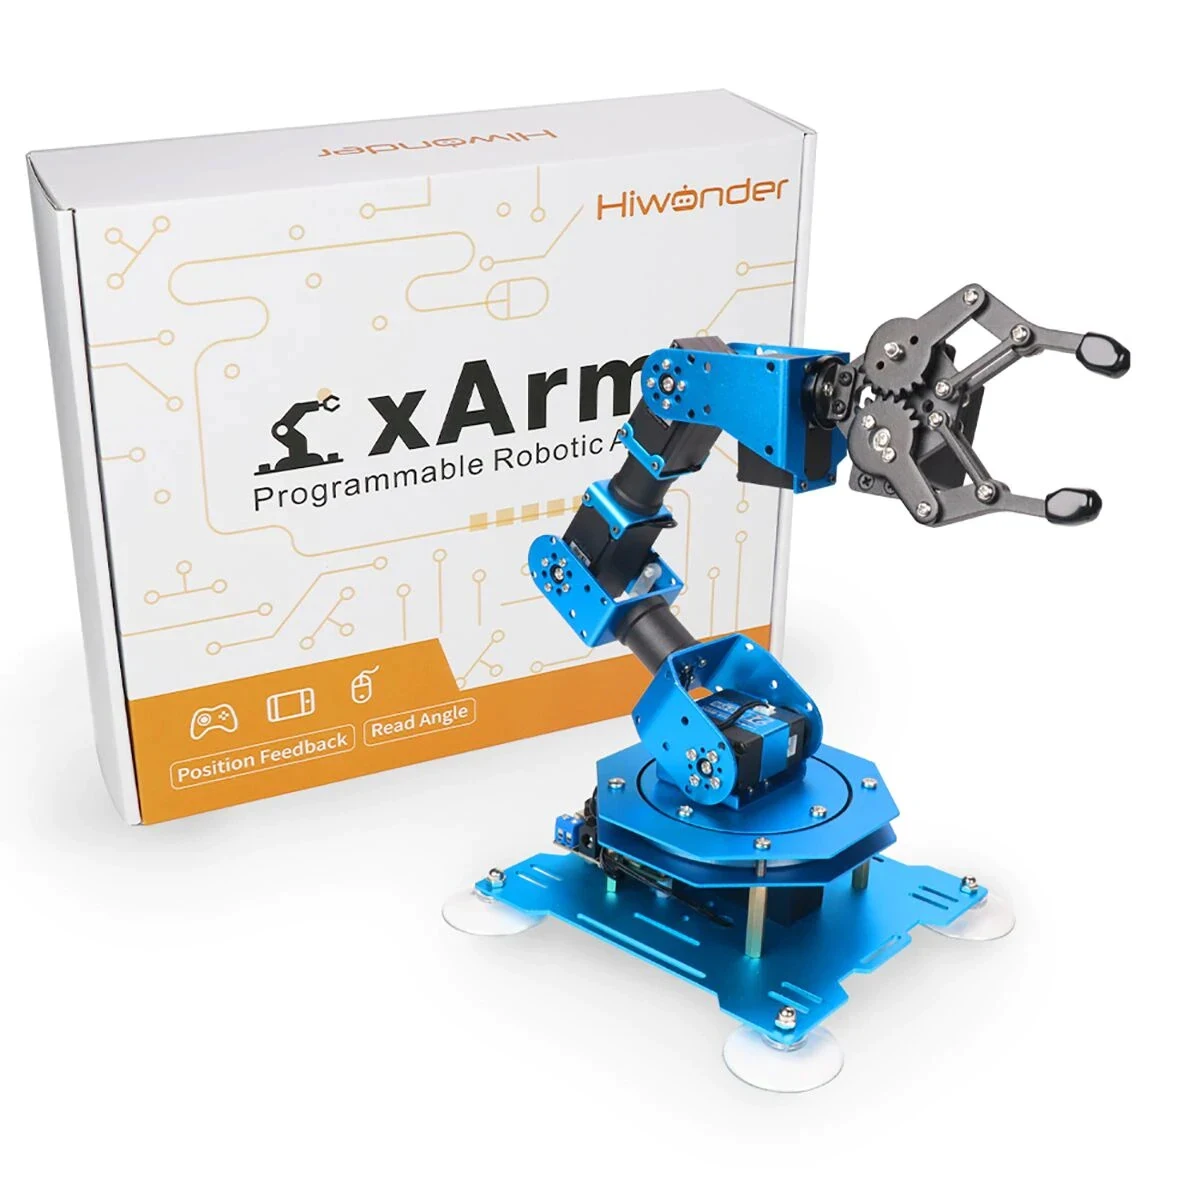 

Assembled XArm UNO 6DOF Robot Arm Mechanical Arm With Secondary Development Sensor Kit For Arduino